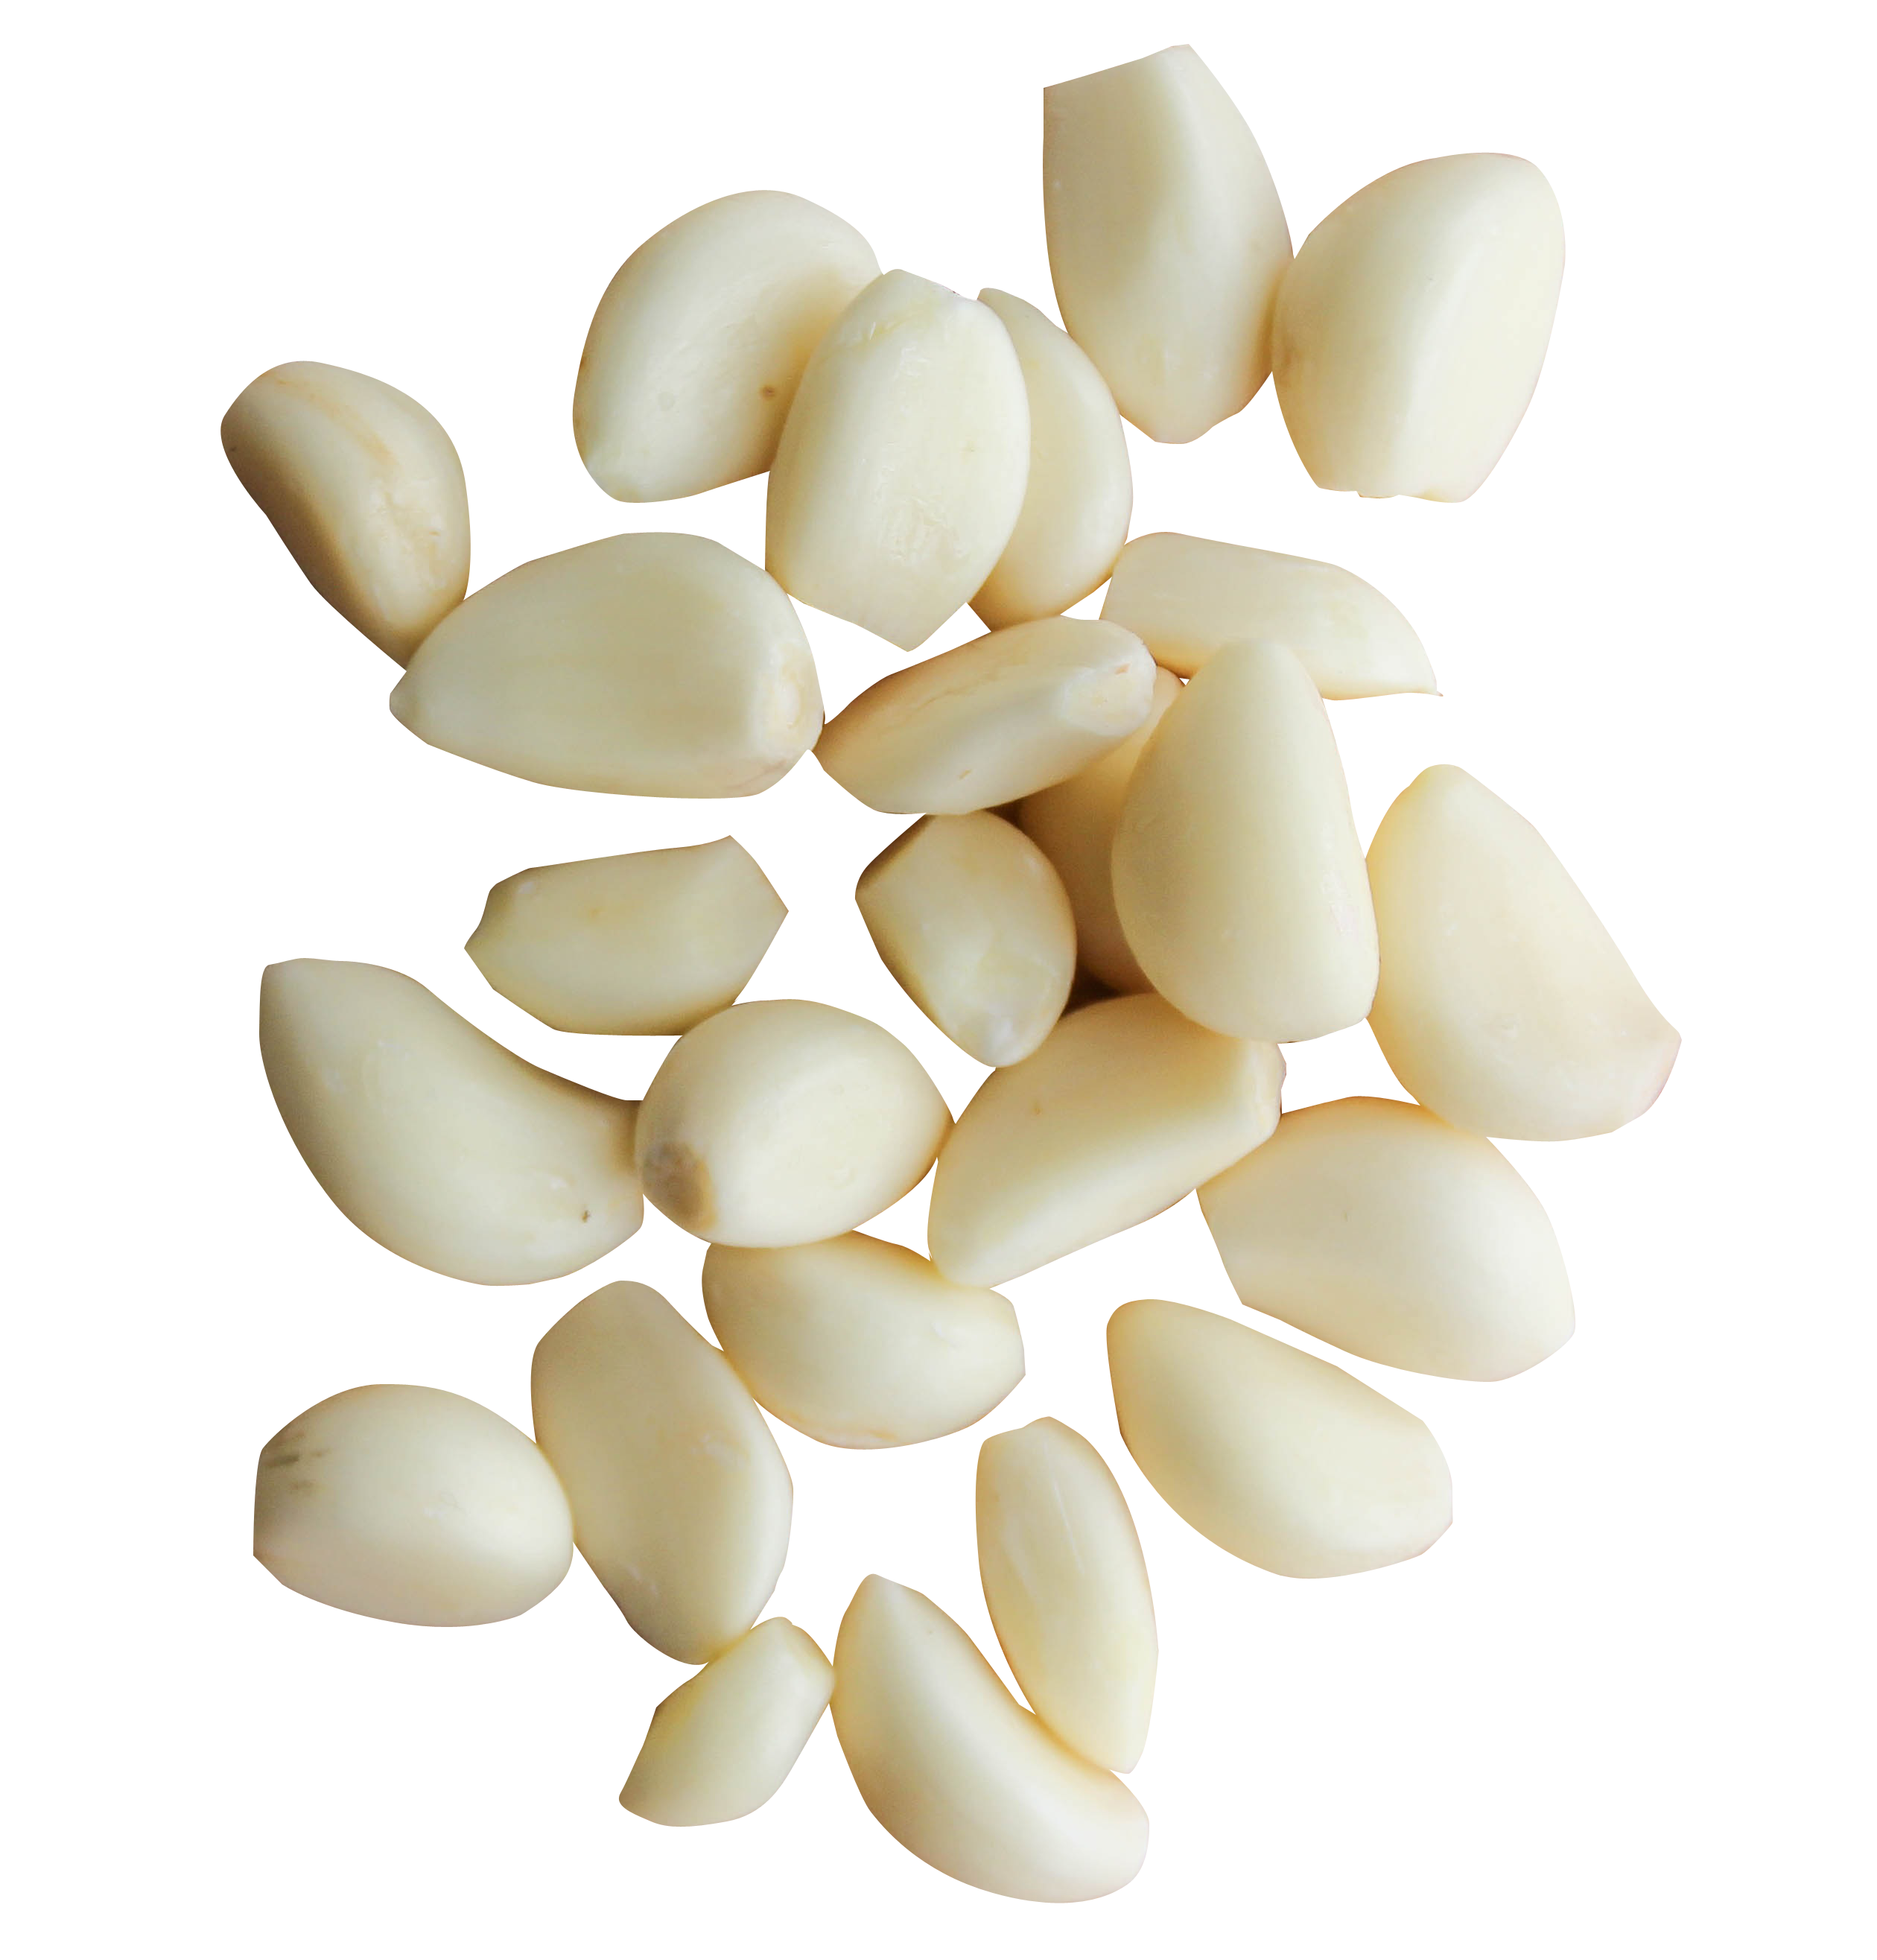 garlic clipart fresh